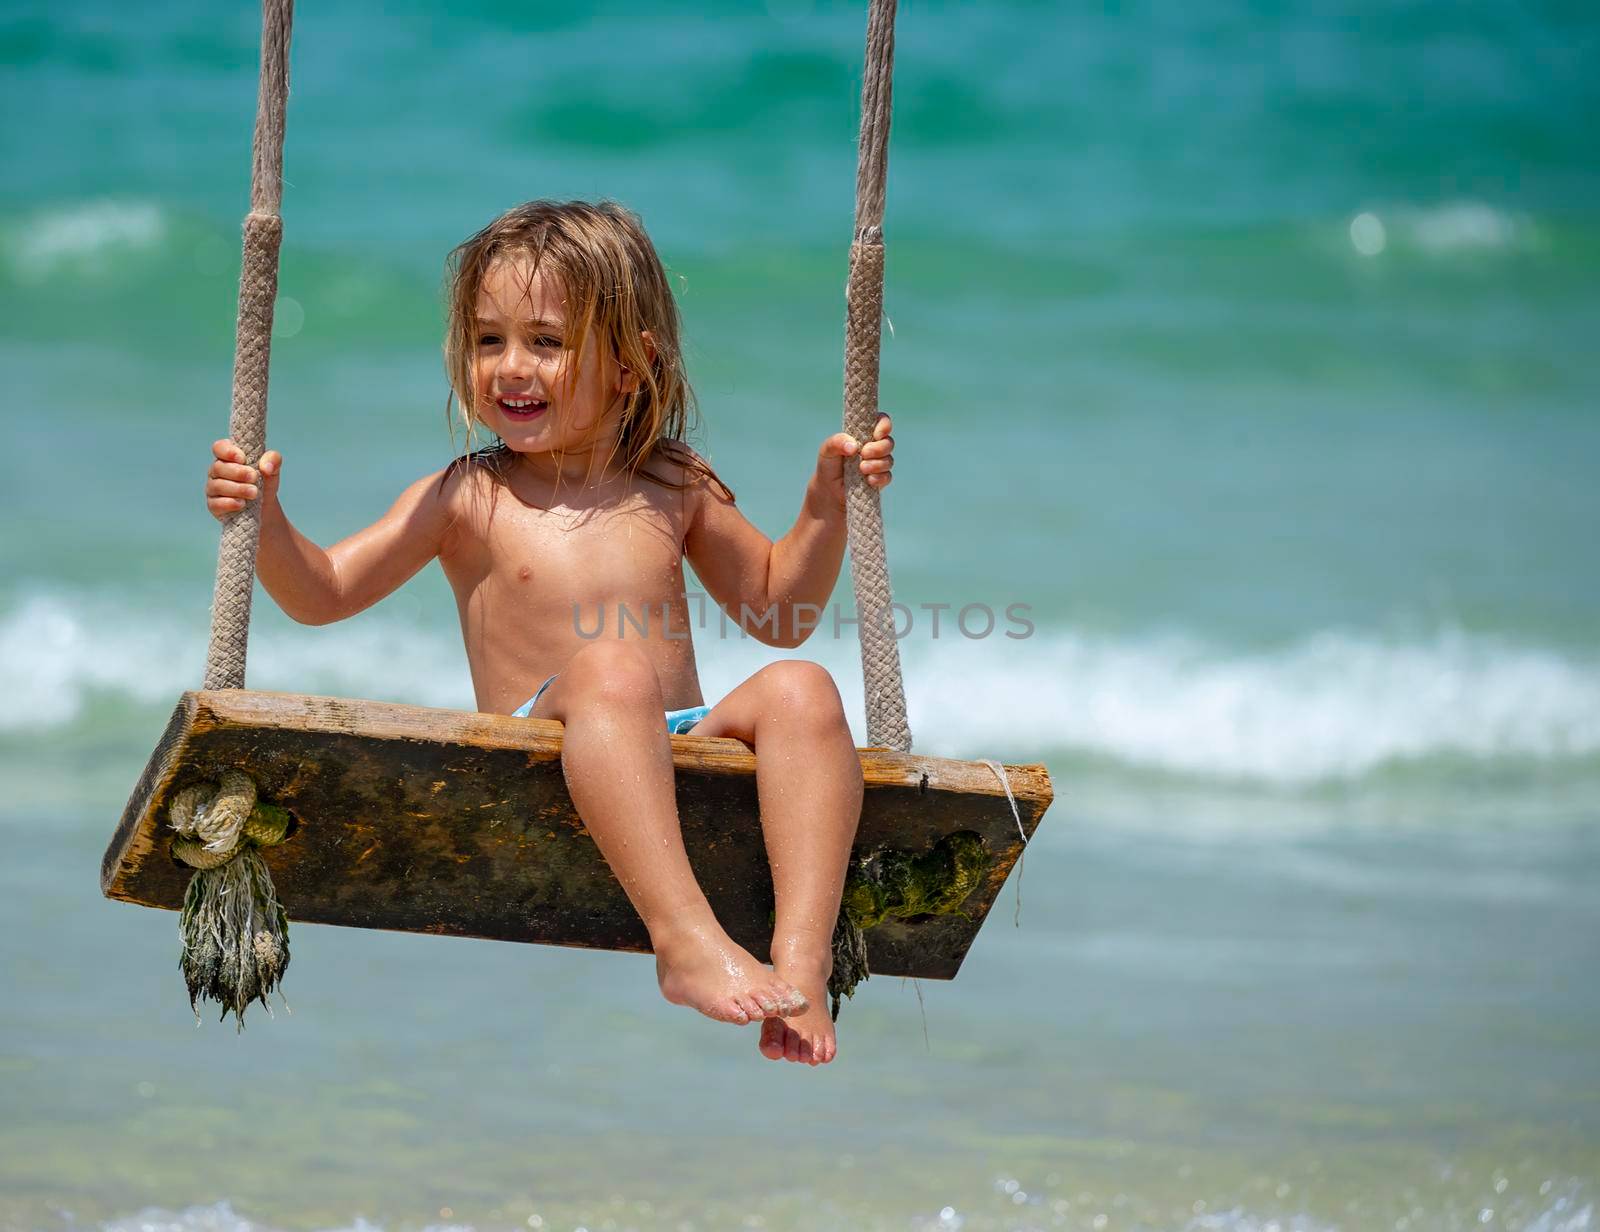 Baby Boy on the Beach by Anna_Omelchenko